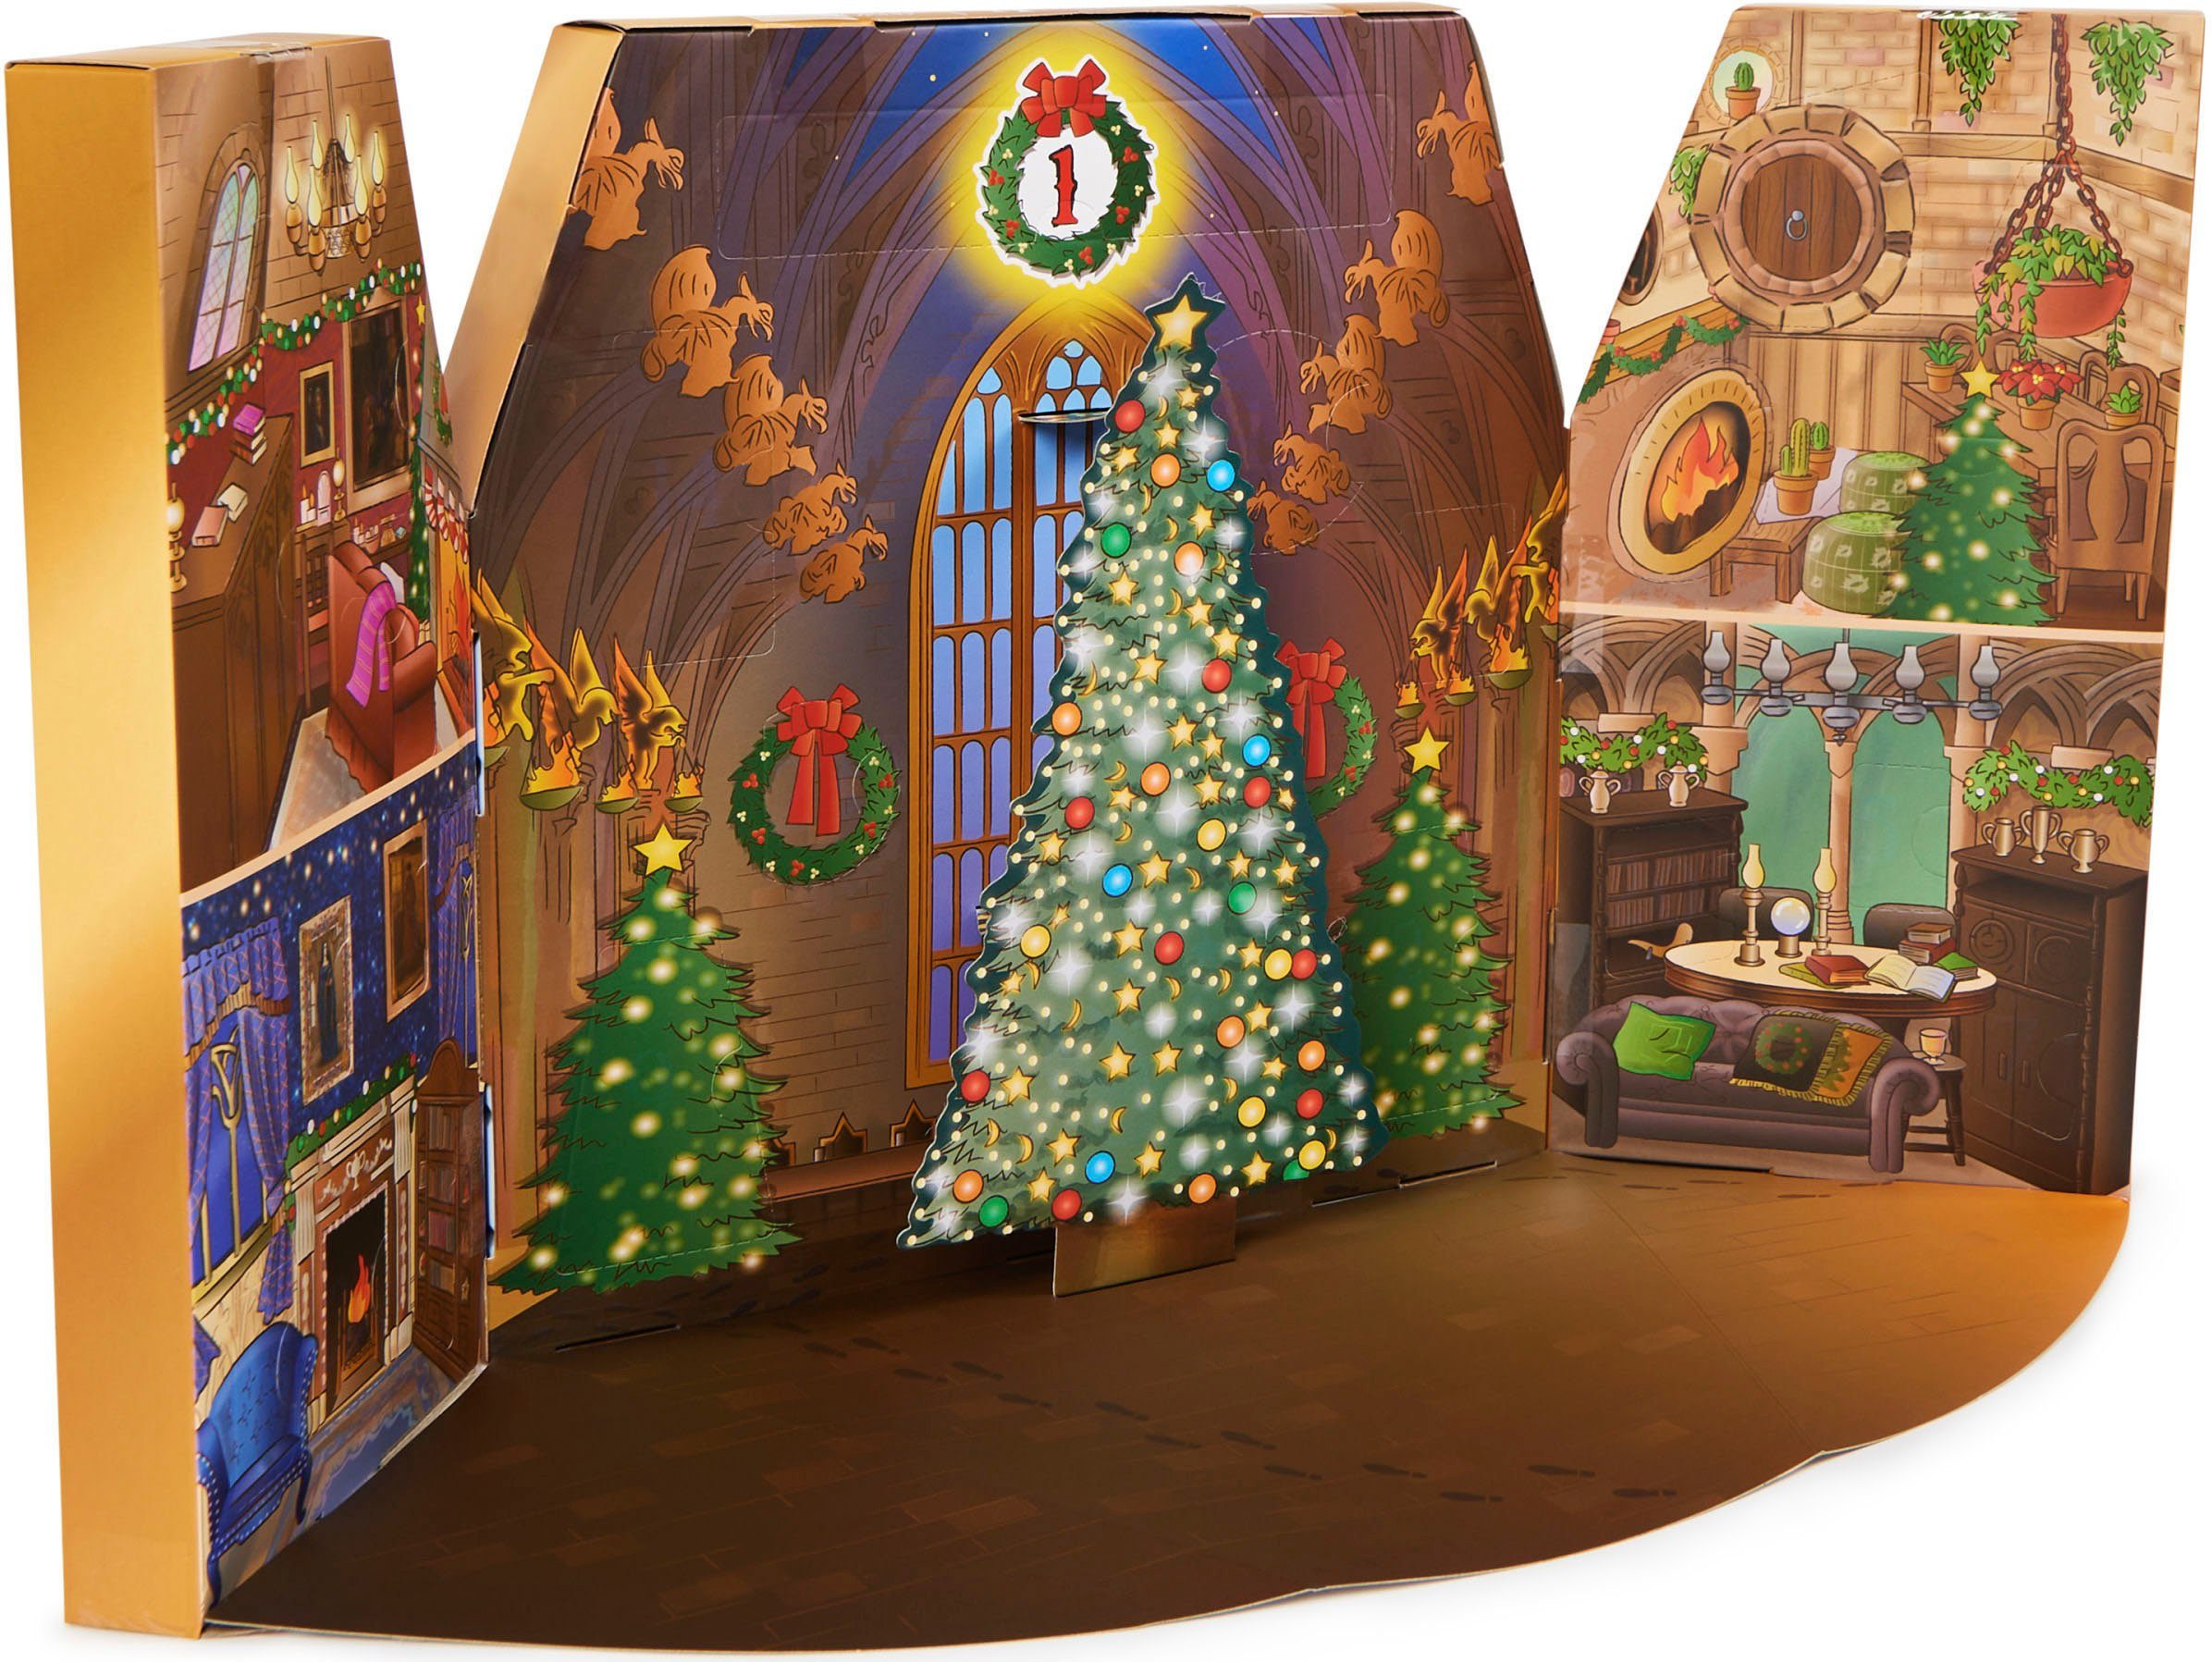 Magical Wizarding Harry Potter Spielzeug-Adventskalender World Adventskalender 2023 Master Spin Minis